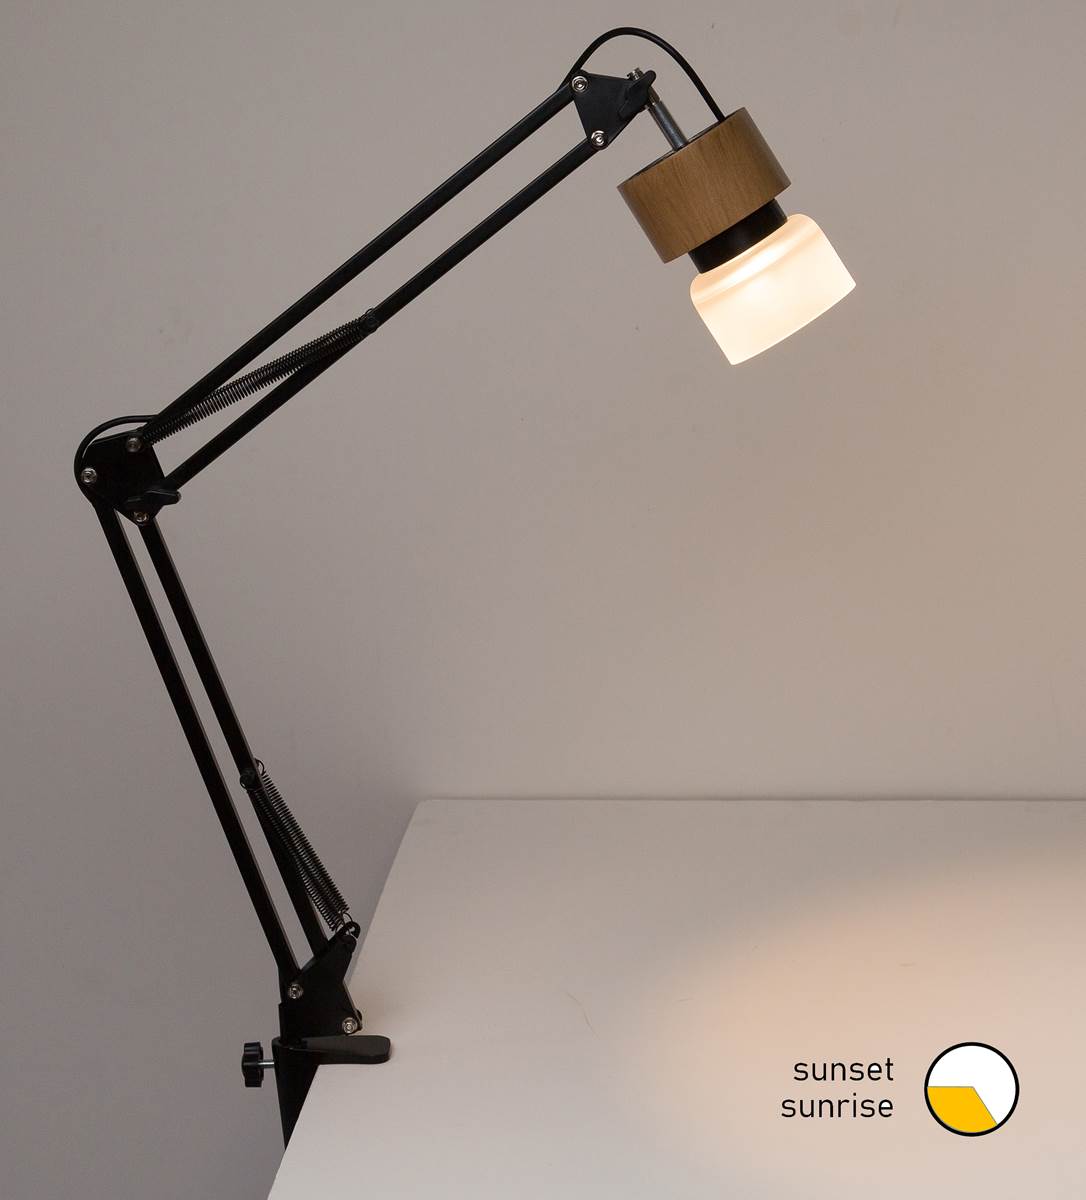 oak (light wood) lamp w/ clamp base